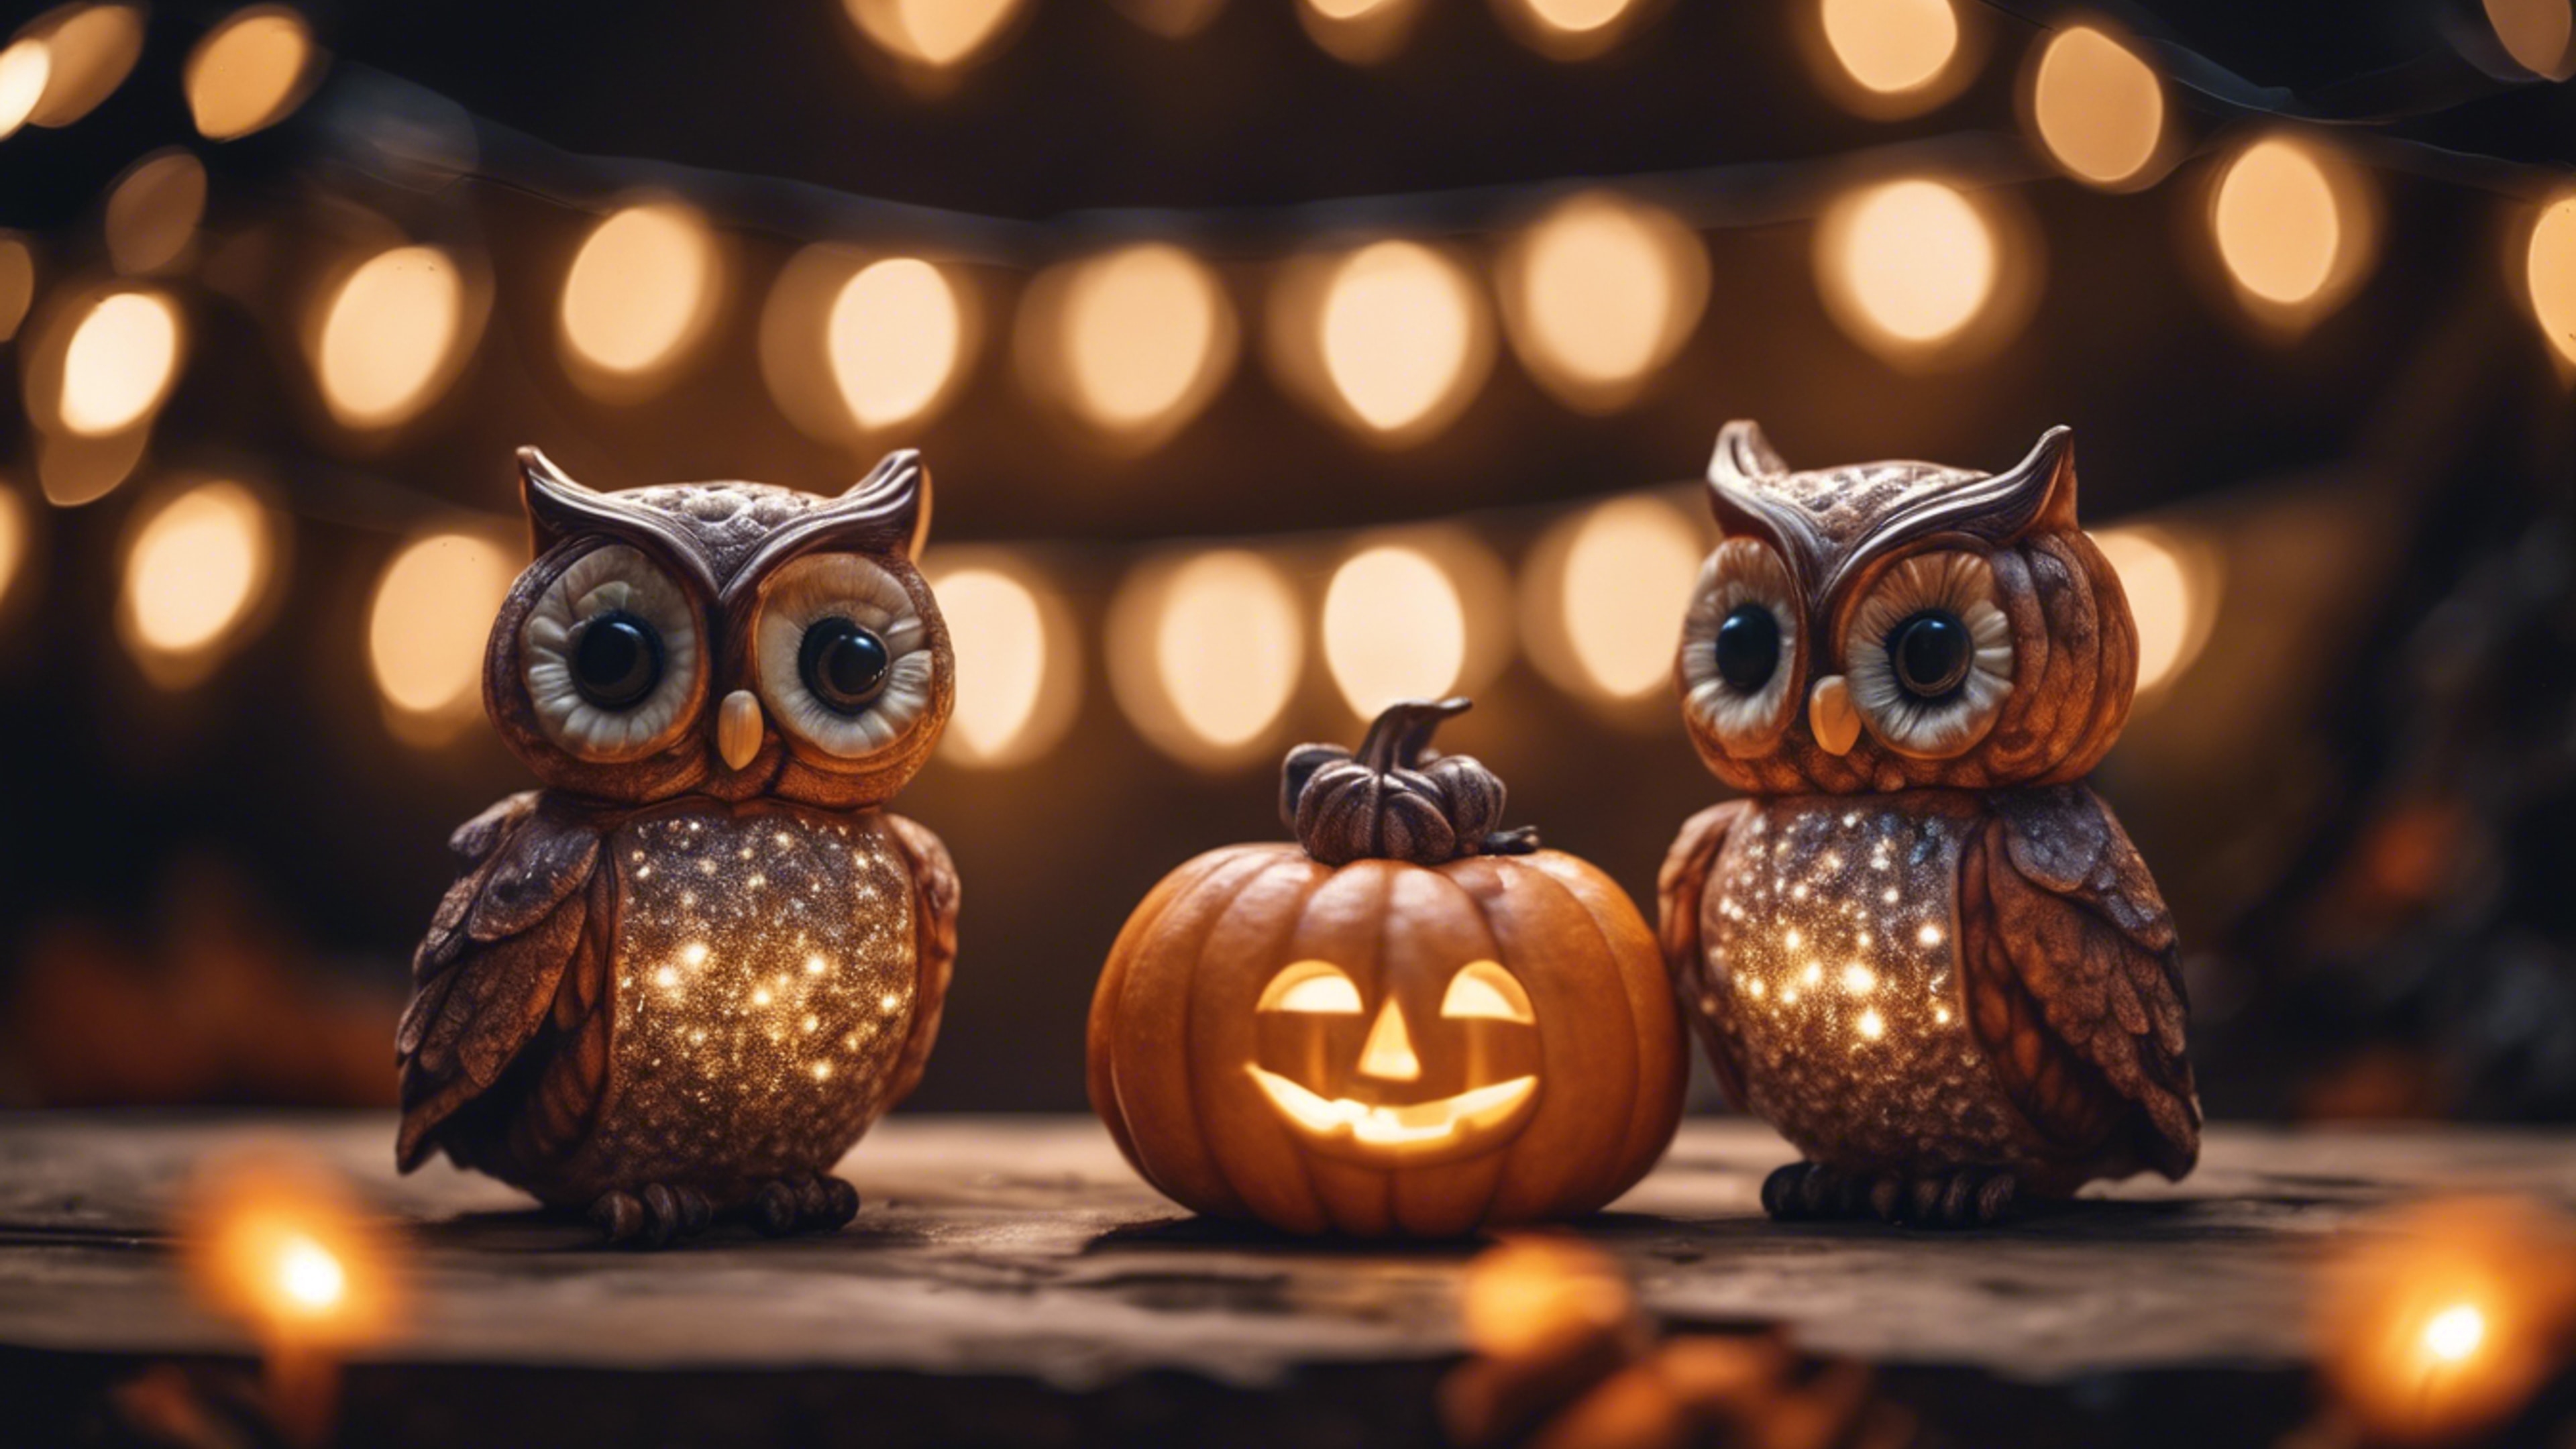 A pair of kawaii owls sitting on a pumpkin under twinkling fairy lights on Halloween night 牆紙[39849ffb0d78427c9221]